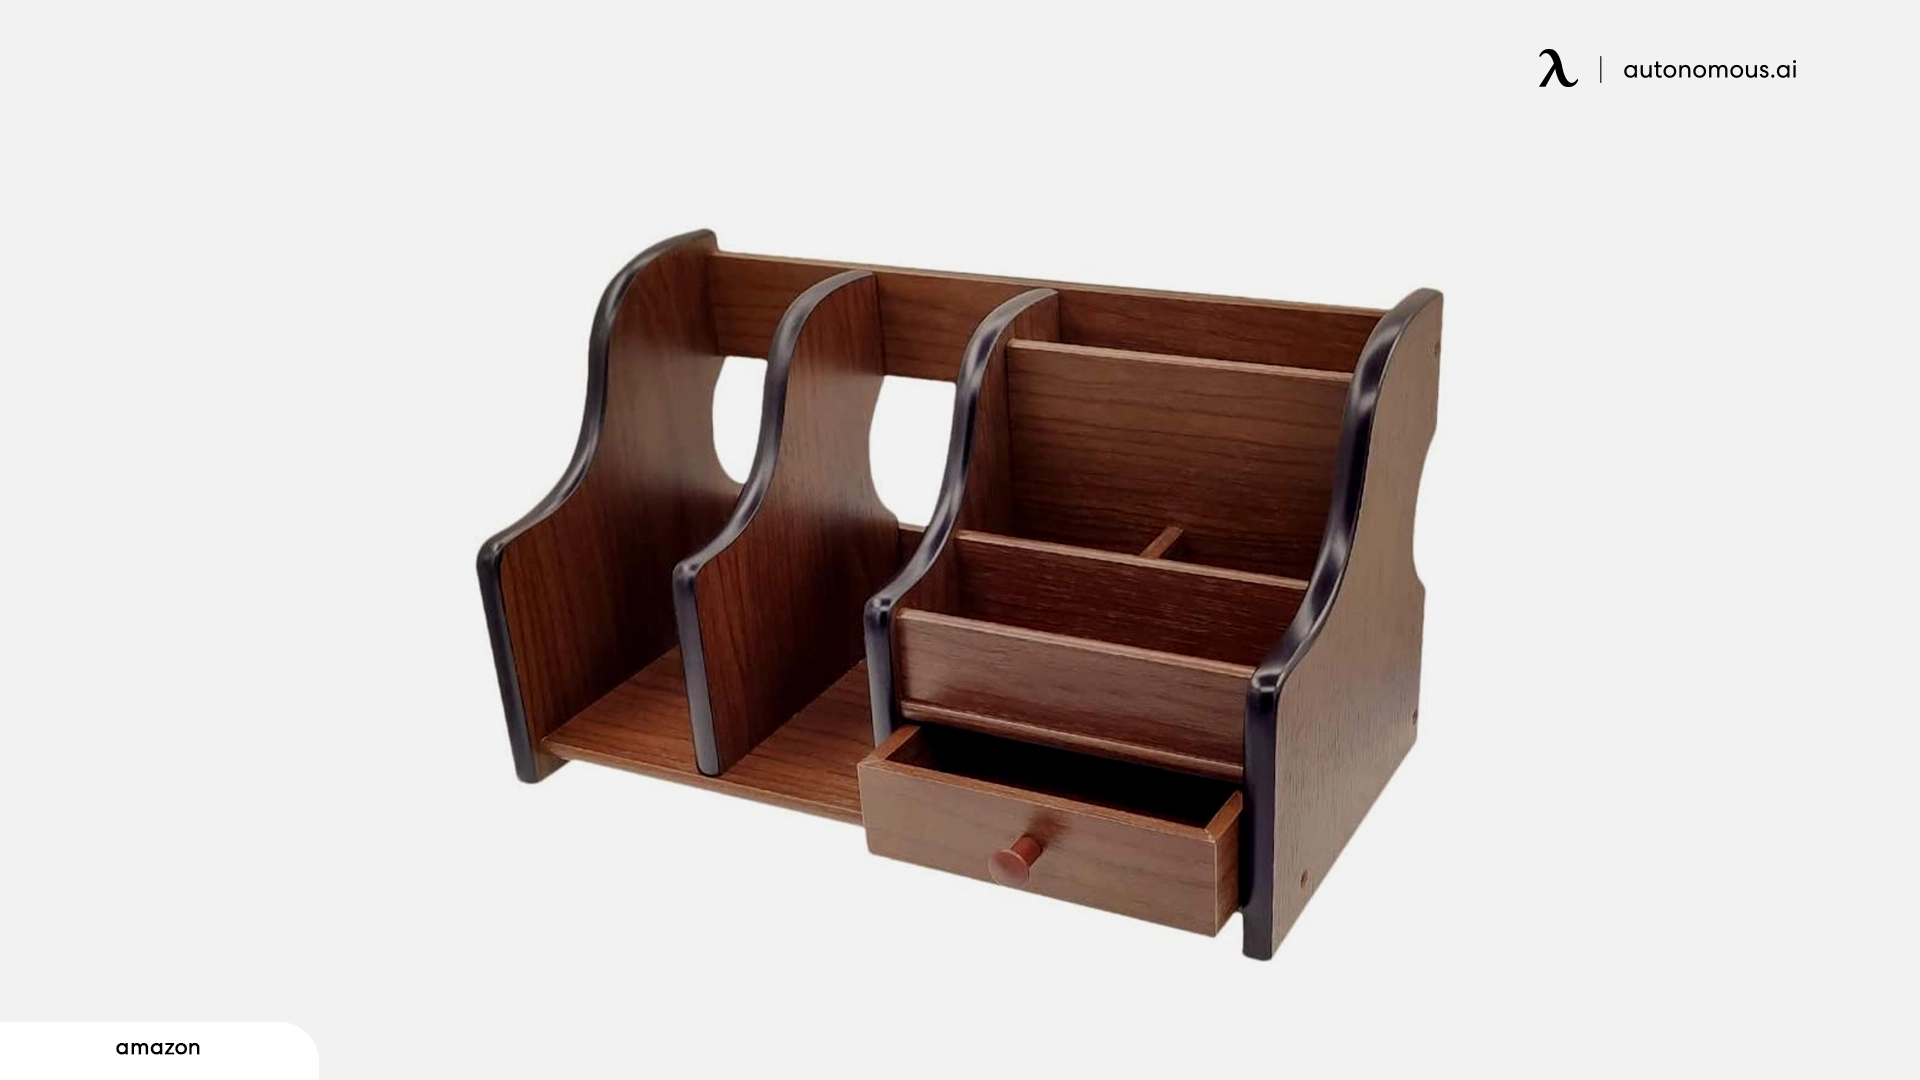 Coideal Wooden Office Supplies Desk Organizer